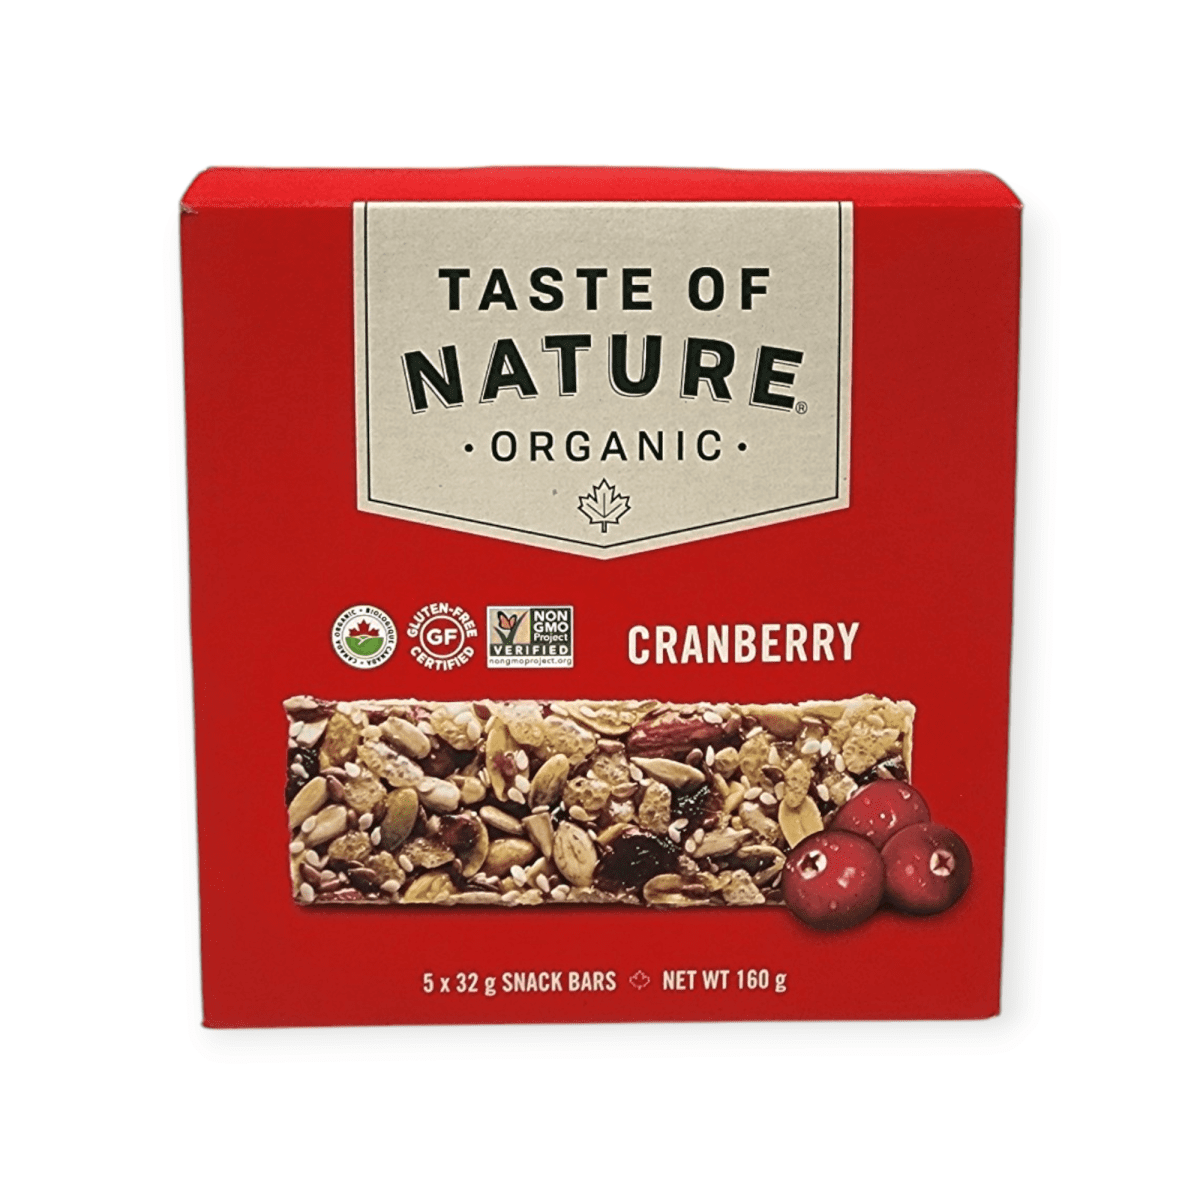 Taste of Nature Organic Cranberry (5x32g)